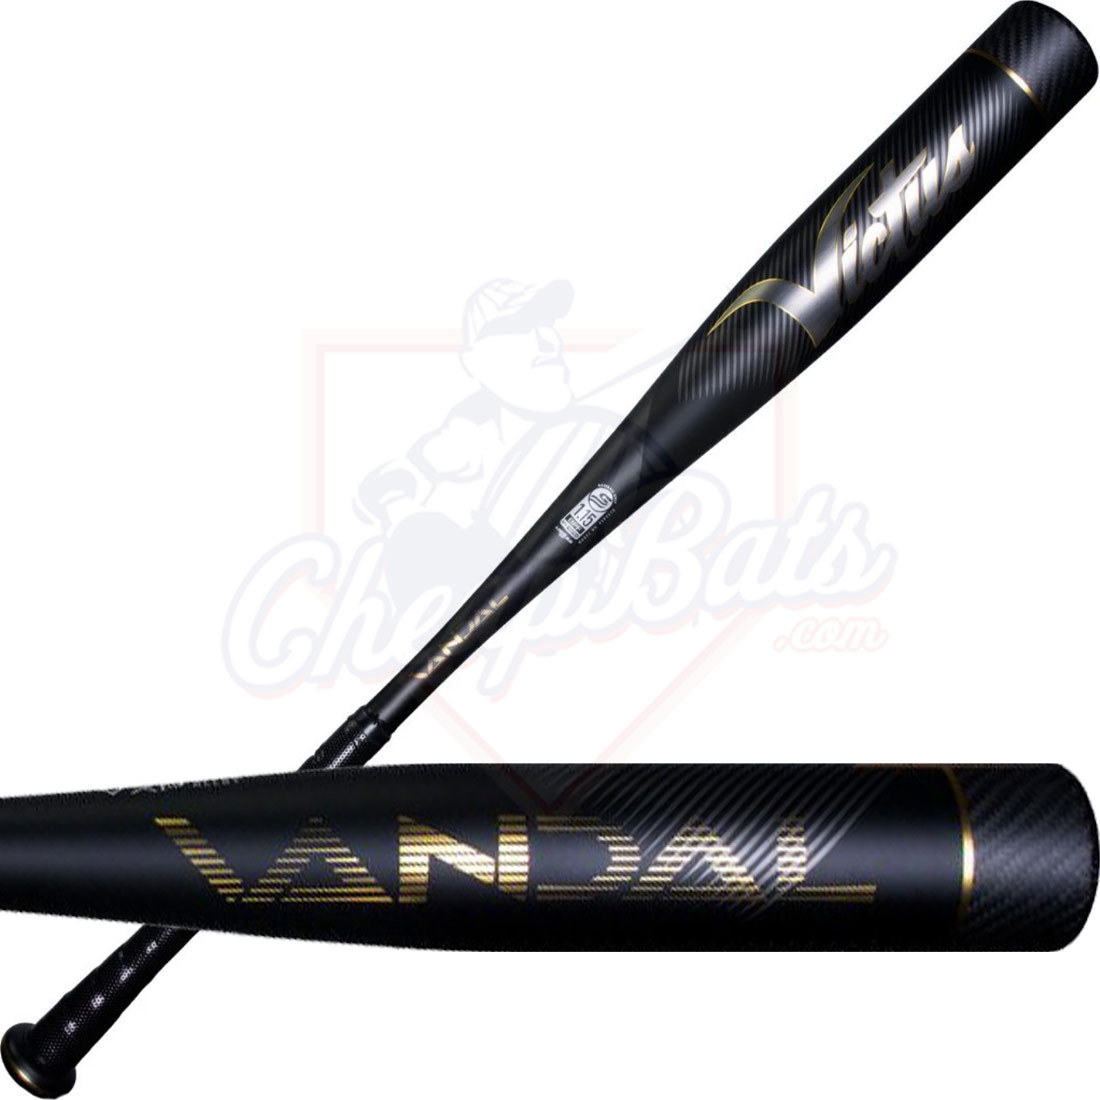 2022 Victus Vandal 2 Youth USSSA Baseball Bat -10oz VSBV2X10